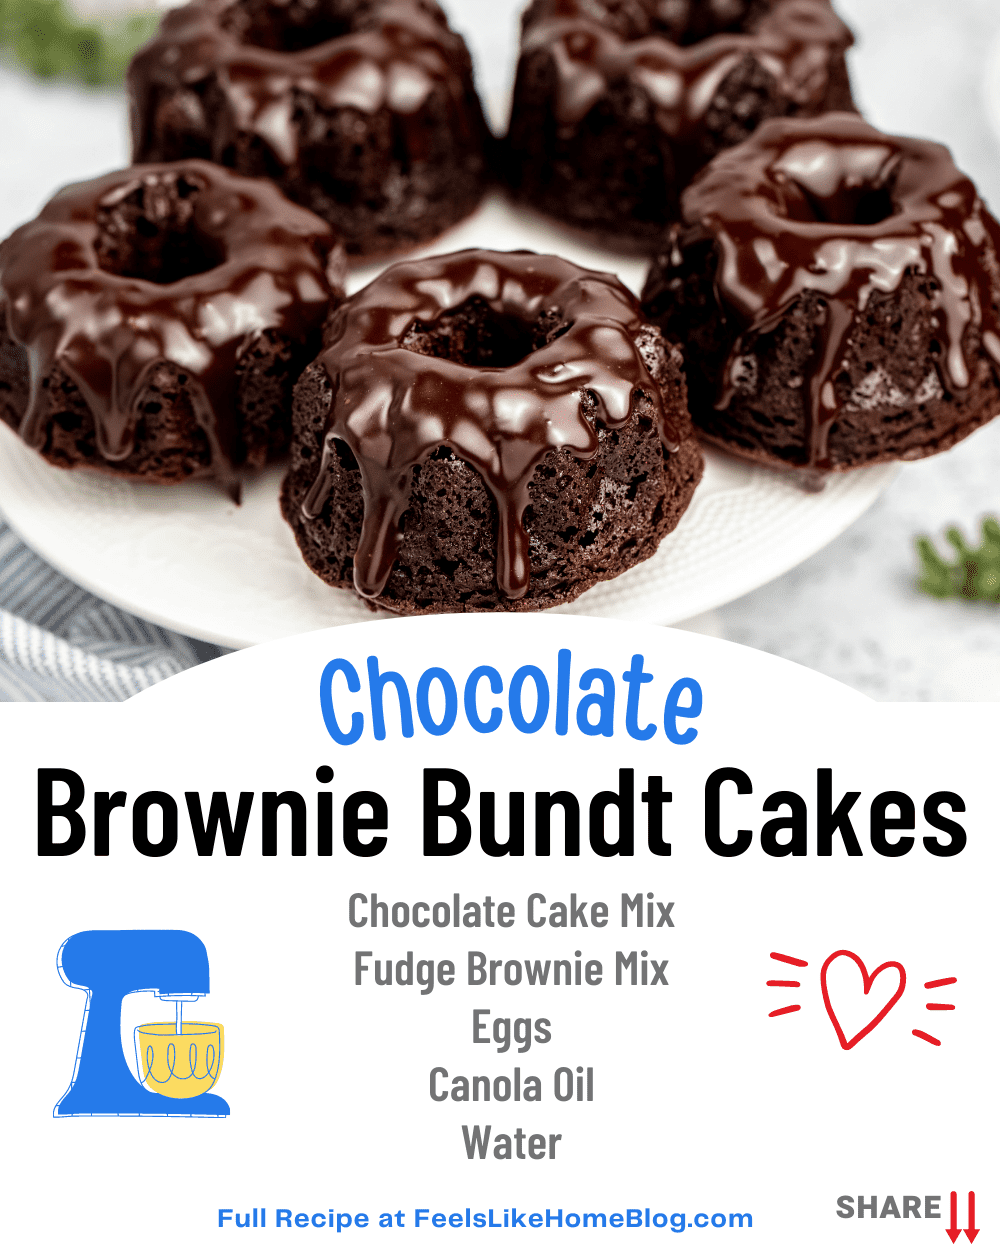 https://feelslikehomeblog.com/wp-content/uploads/2022/05/The-Best-Mini-Chocolate-Bundt-Cake-Recipe-FB-long.png